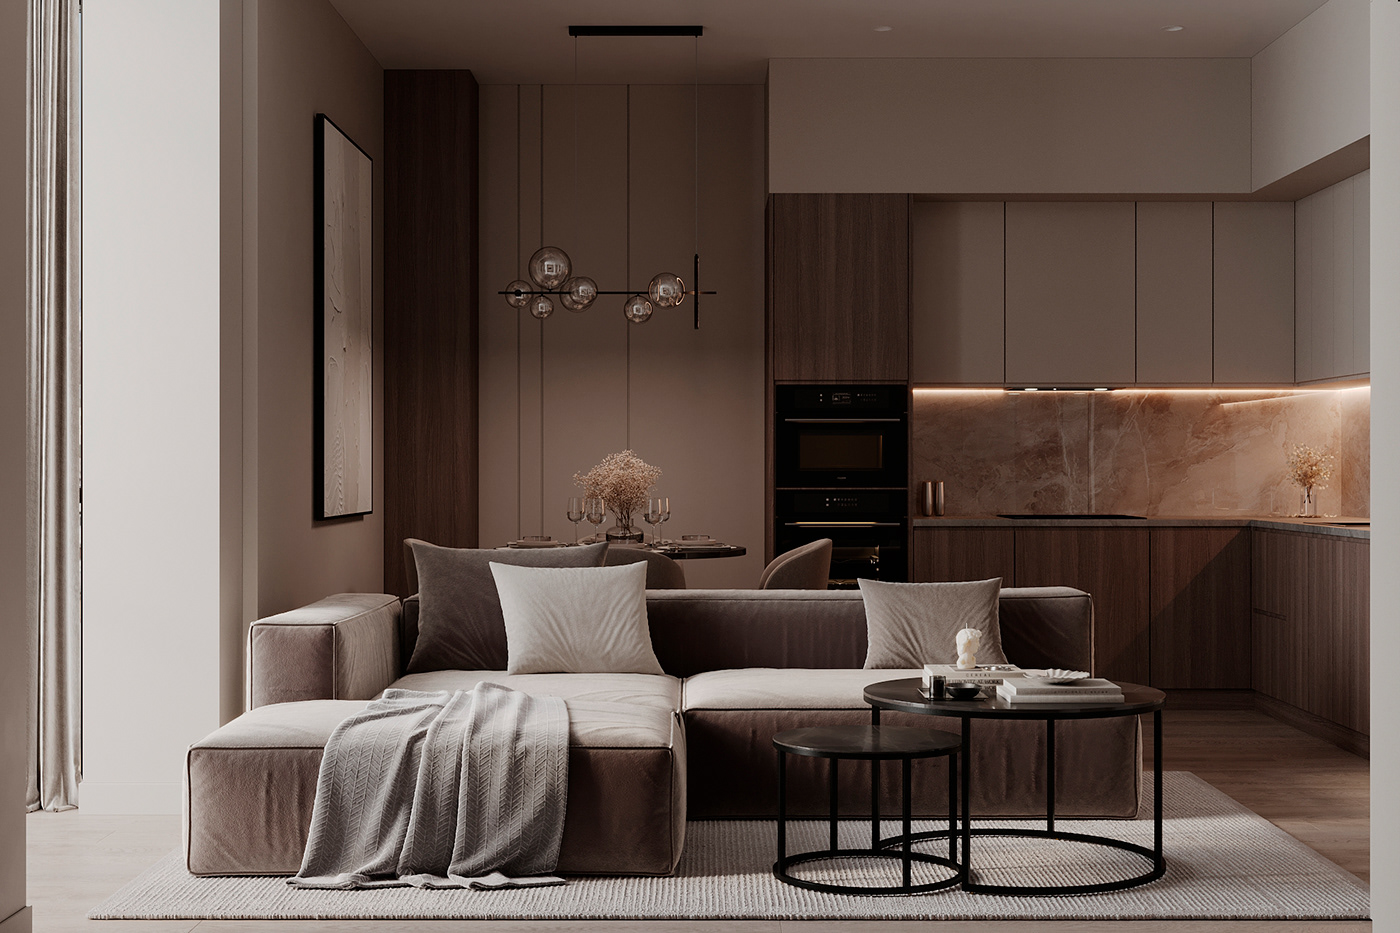 kitchen kitchen design living room living room design Interior apartment design apartment visualization modern